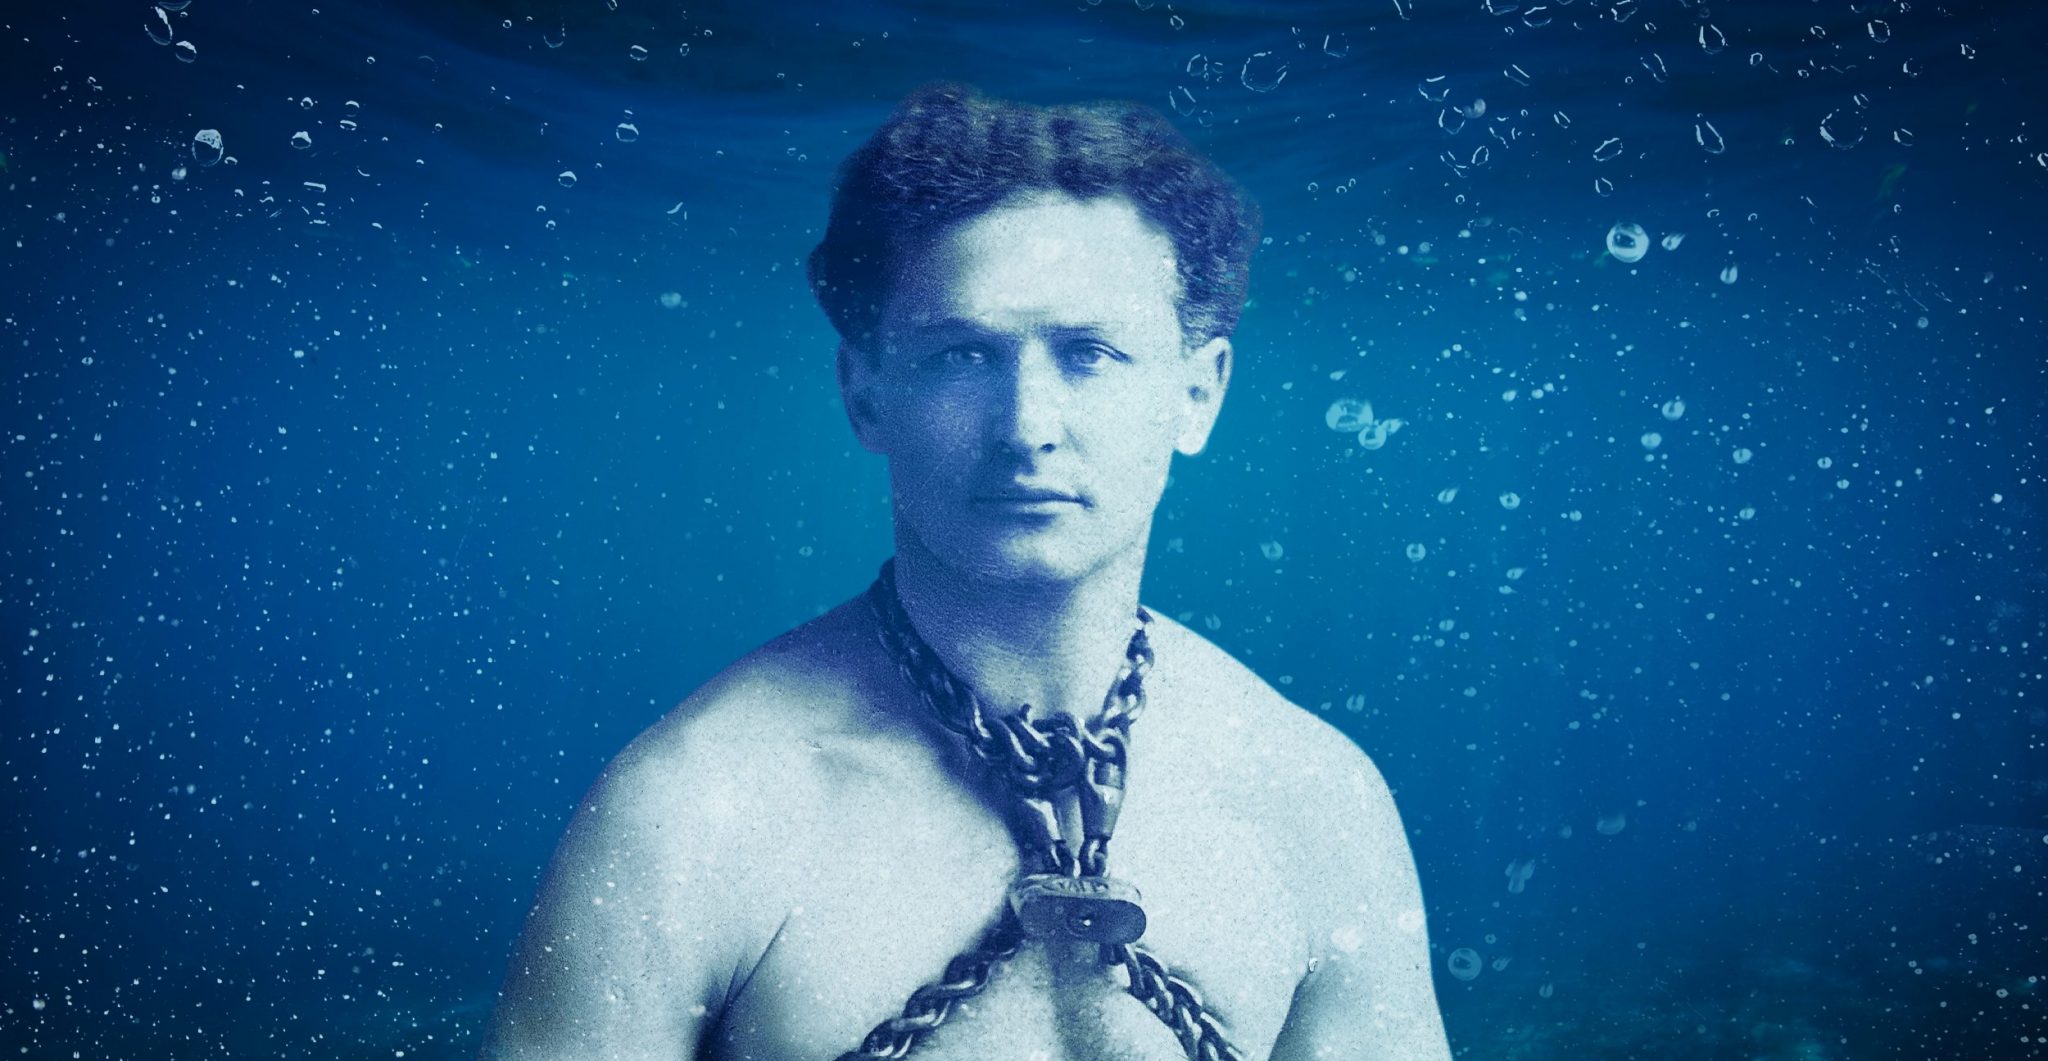 Houdini image - Photo by ullstein bild/ullstein bild via Getty Images